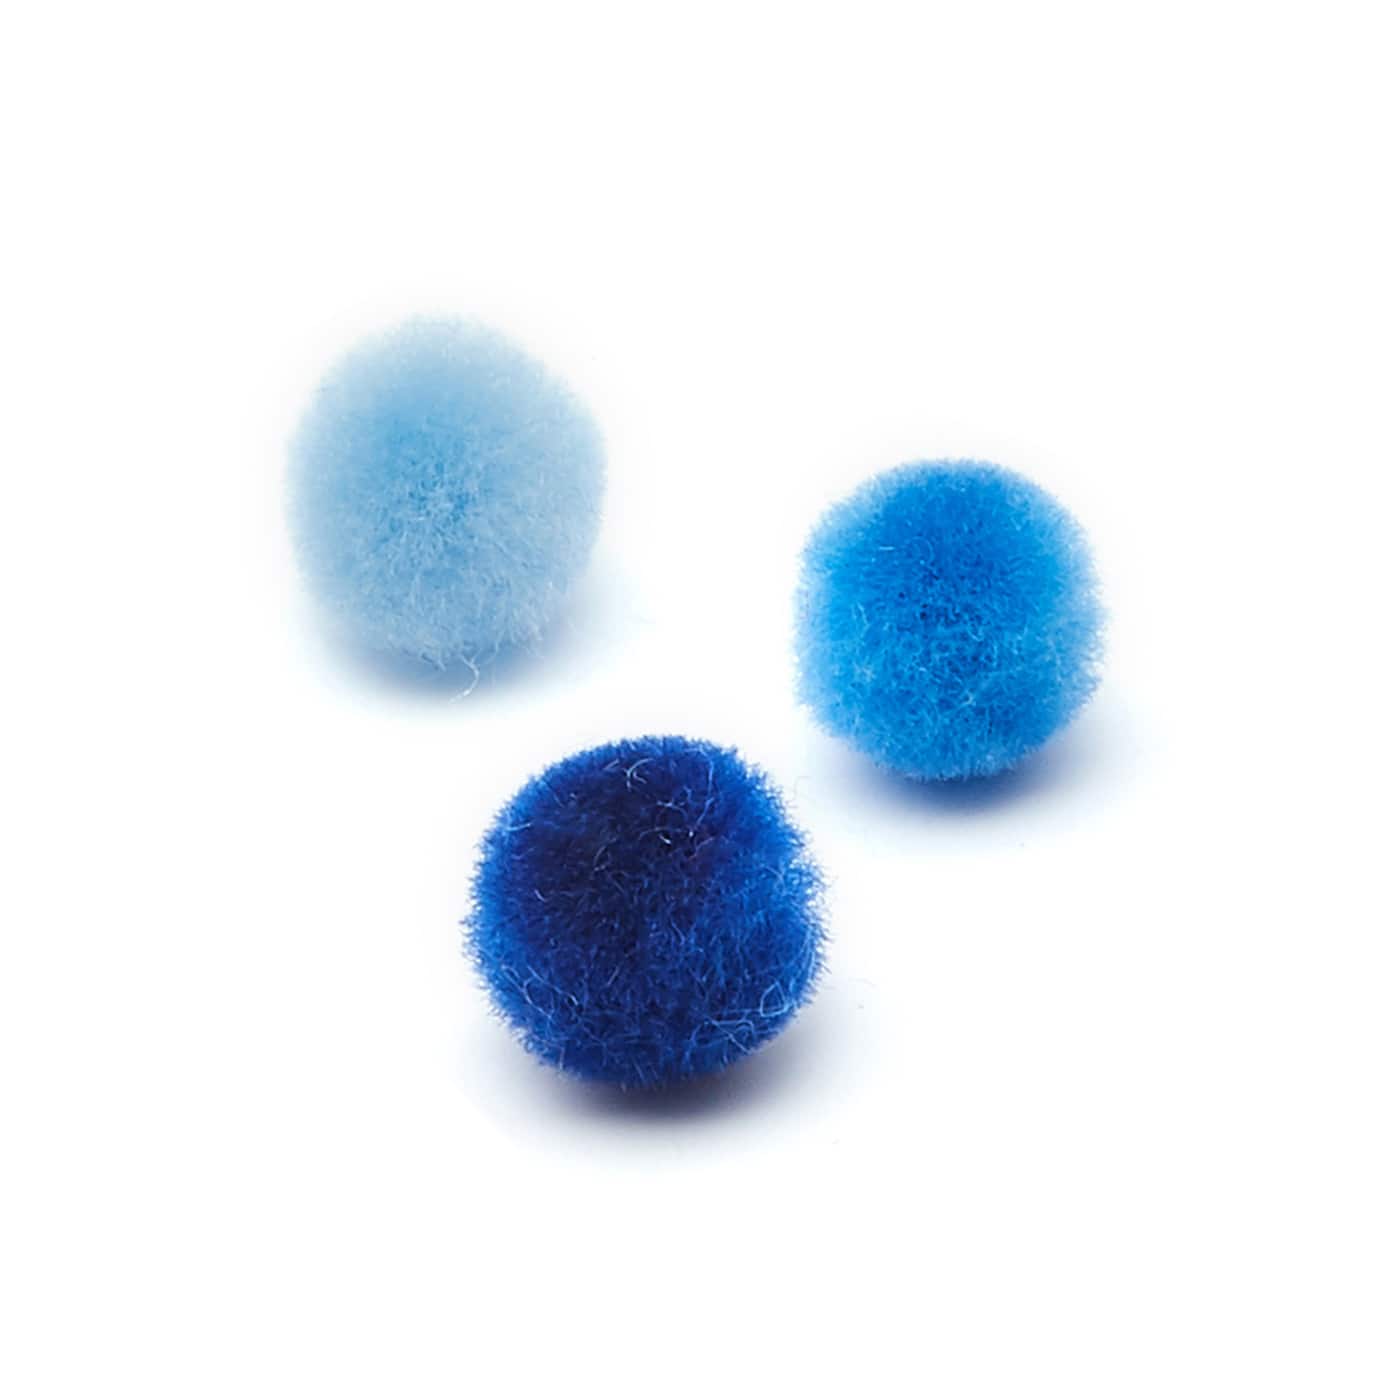 Tiny Blue Pom Poms  Light Blue Pom-Poms - .5in. - 100 Pcs